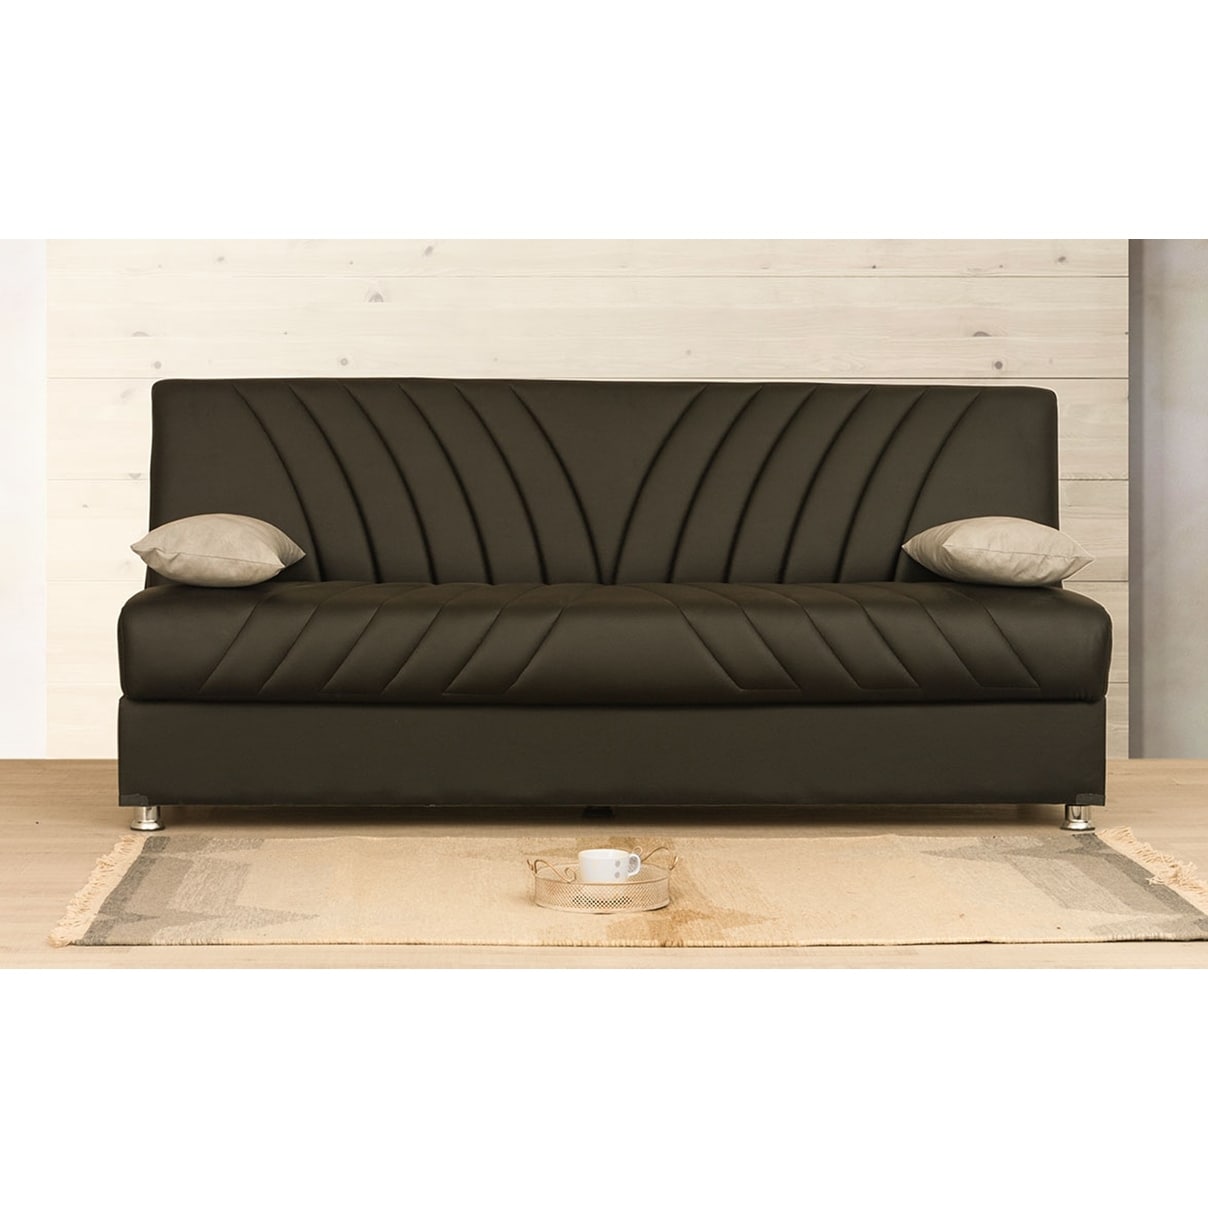 Cordova Brown Leather Armless Sleeper Sofa With Storage